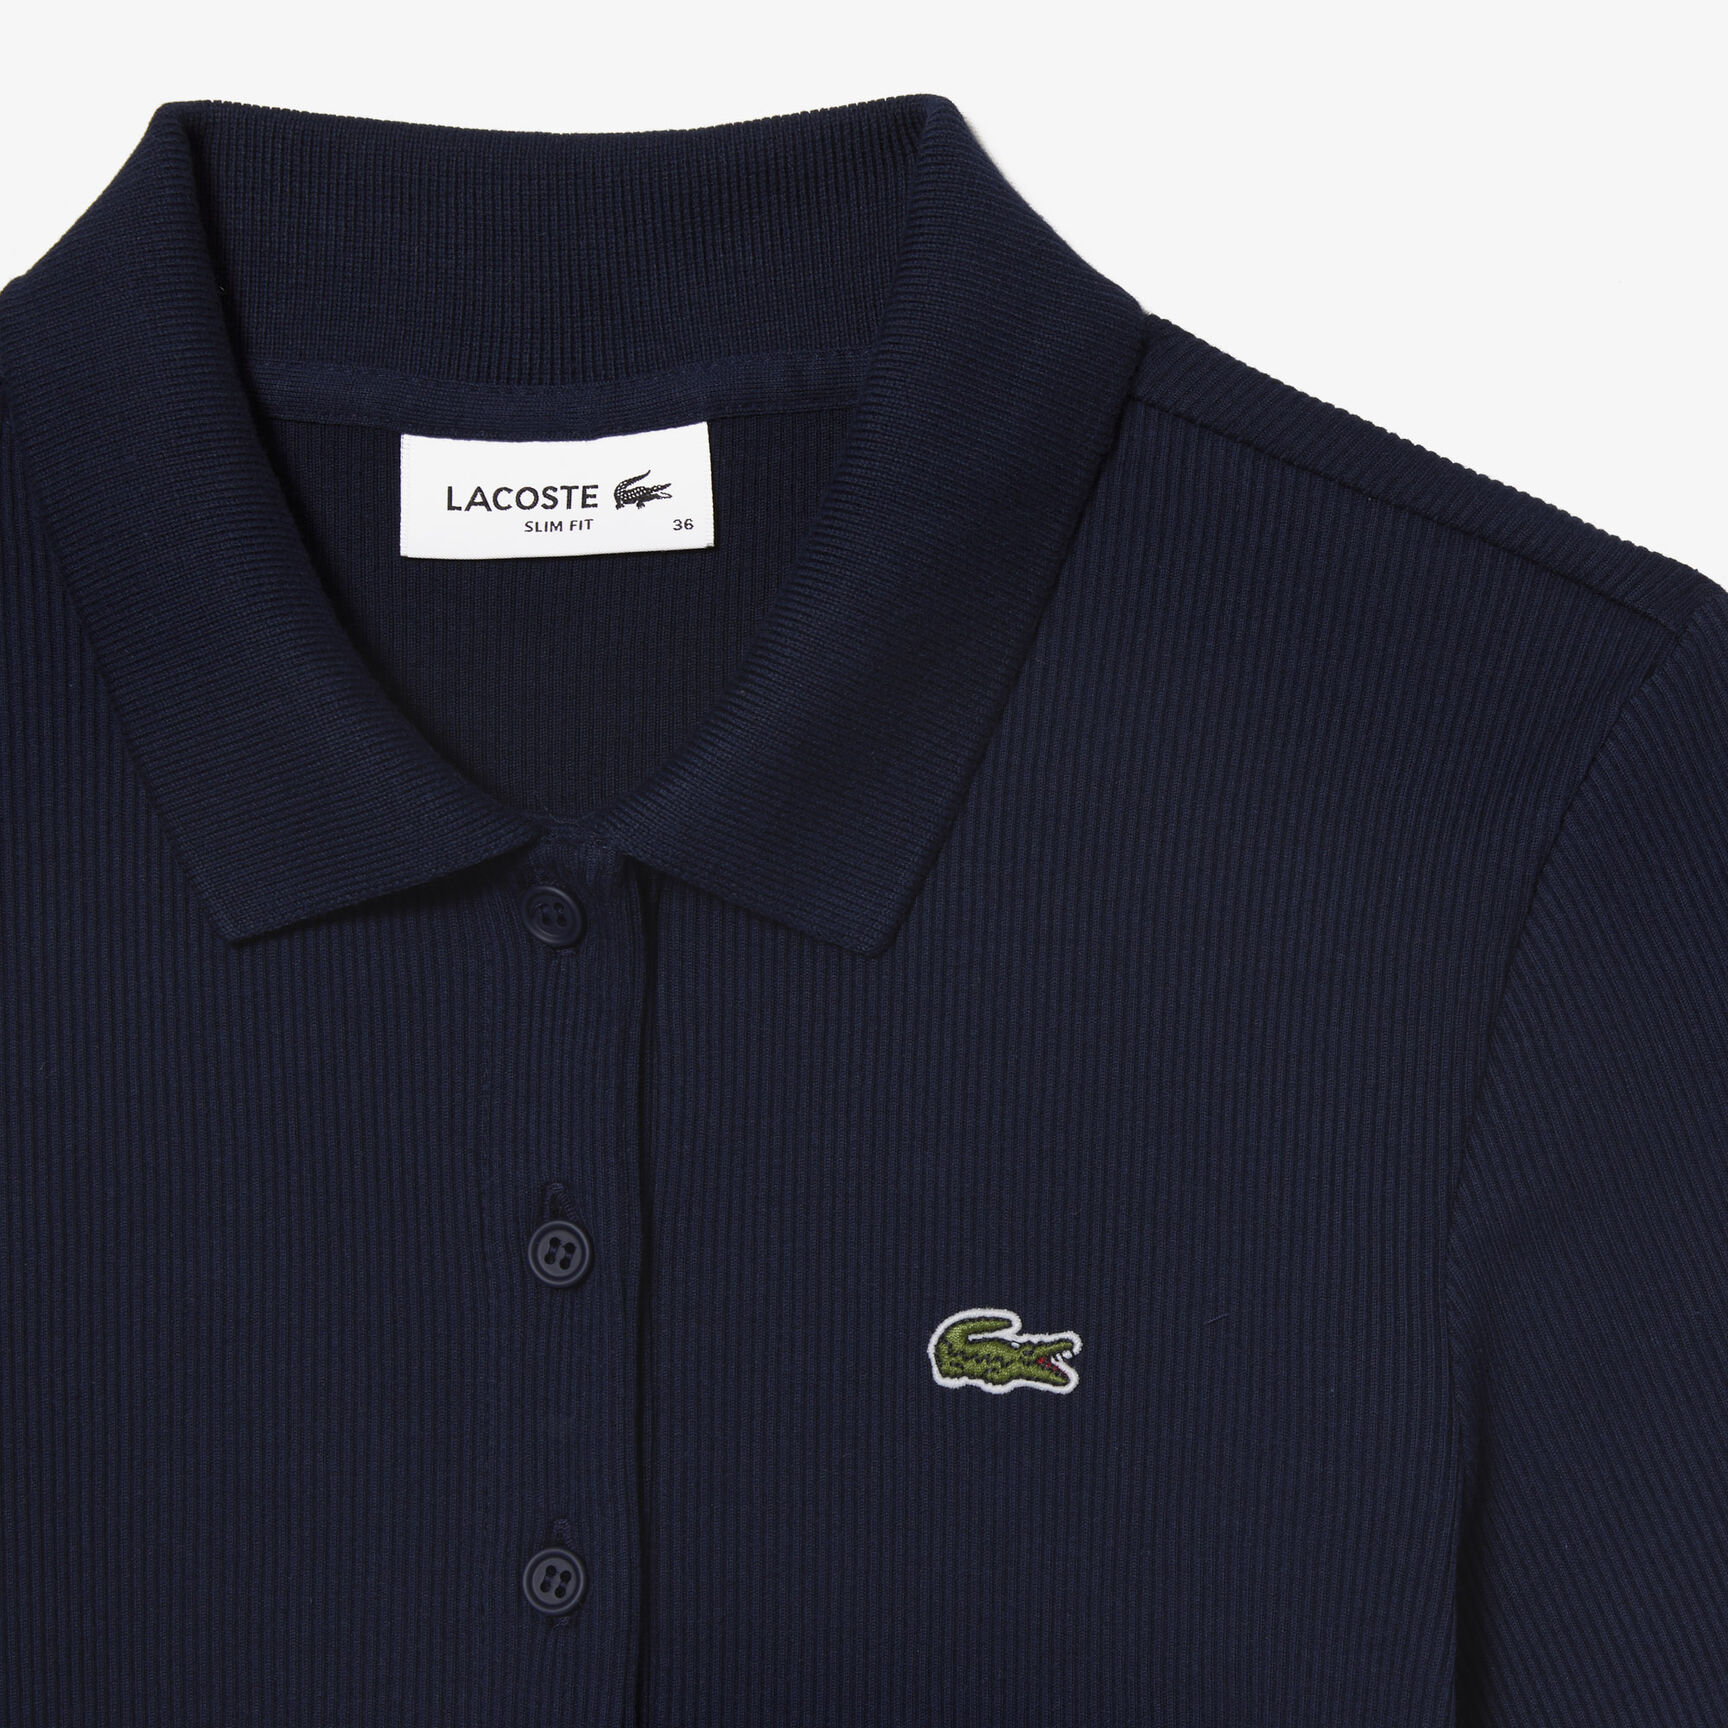 Buy Women's Lacoste Slim Fit Organic Cotton Polo Shirt | Lacoste UAE